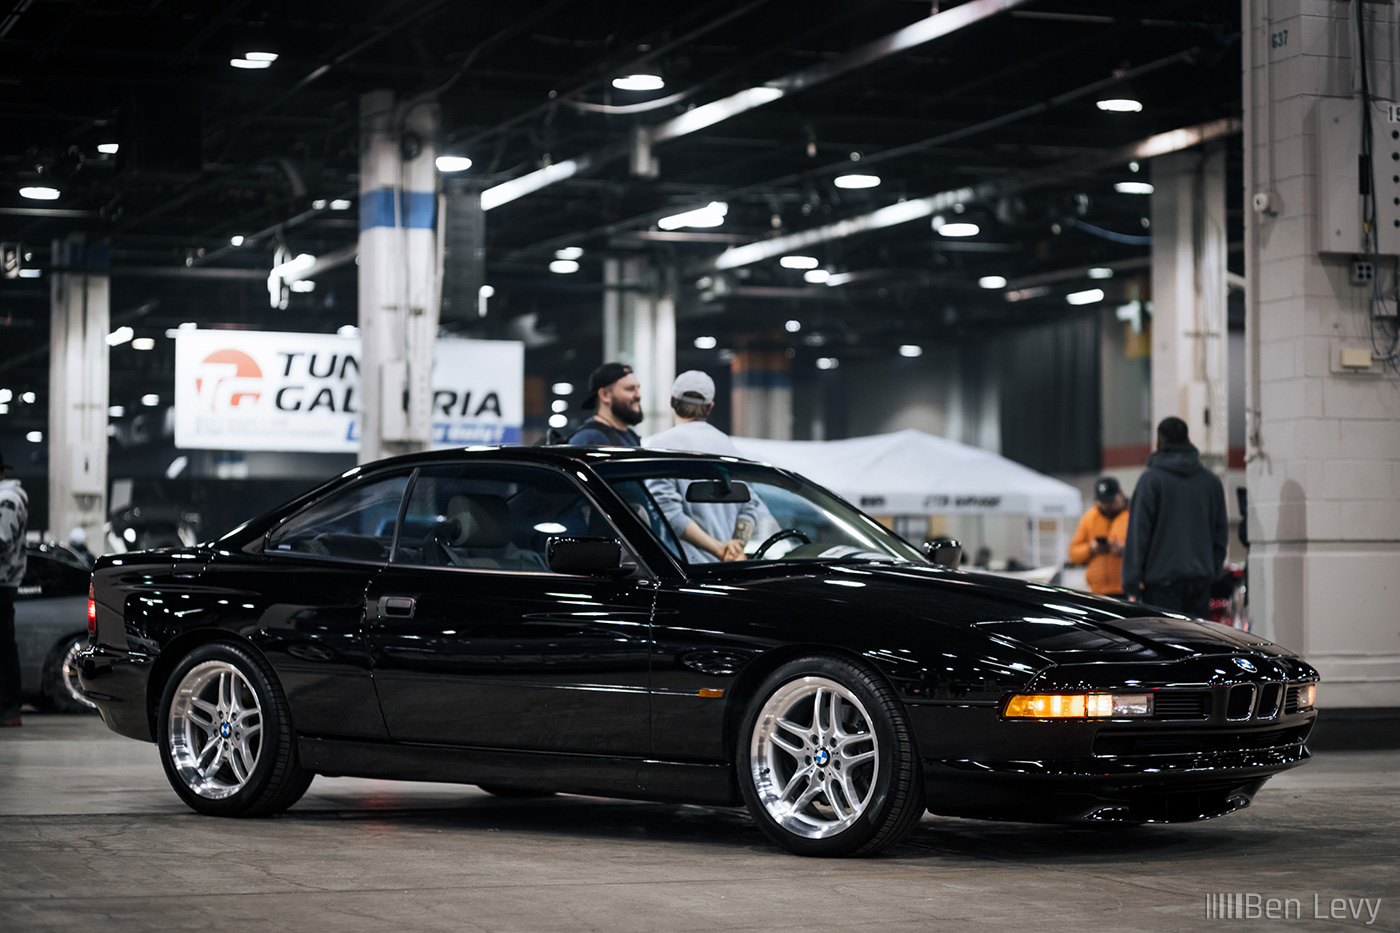 Black BMW E31 8 Series Coupe at Tuner Galleria